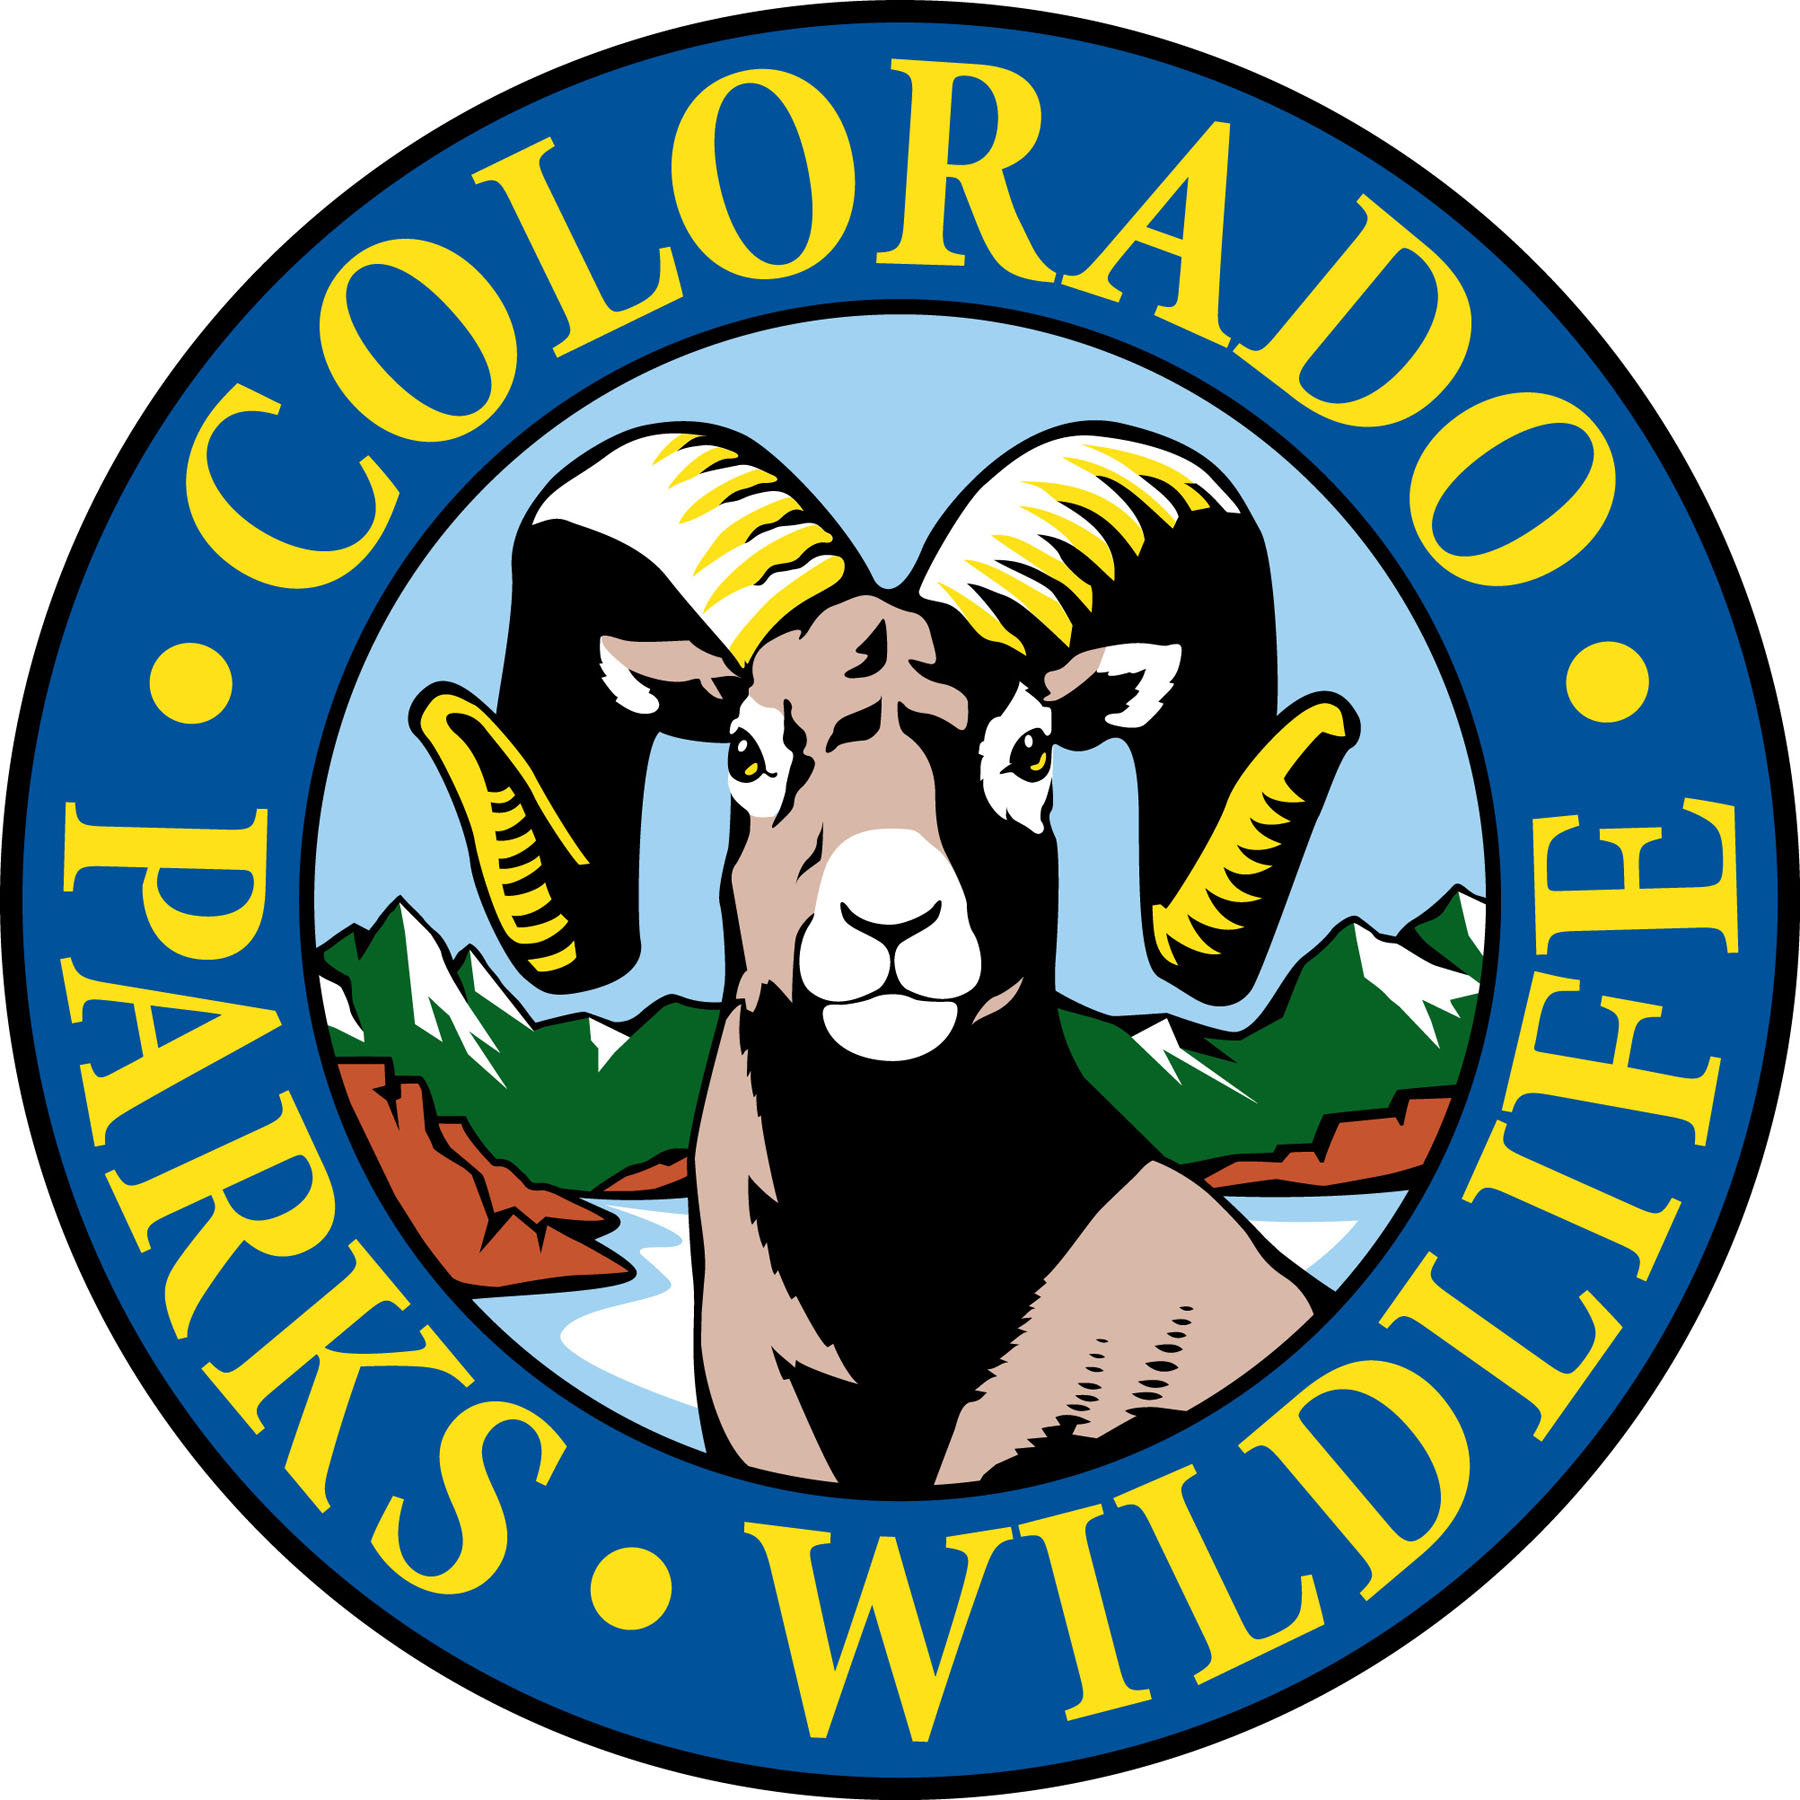 Colorado State Parks